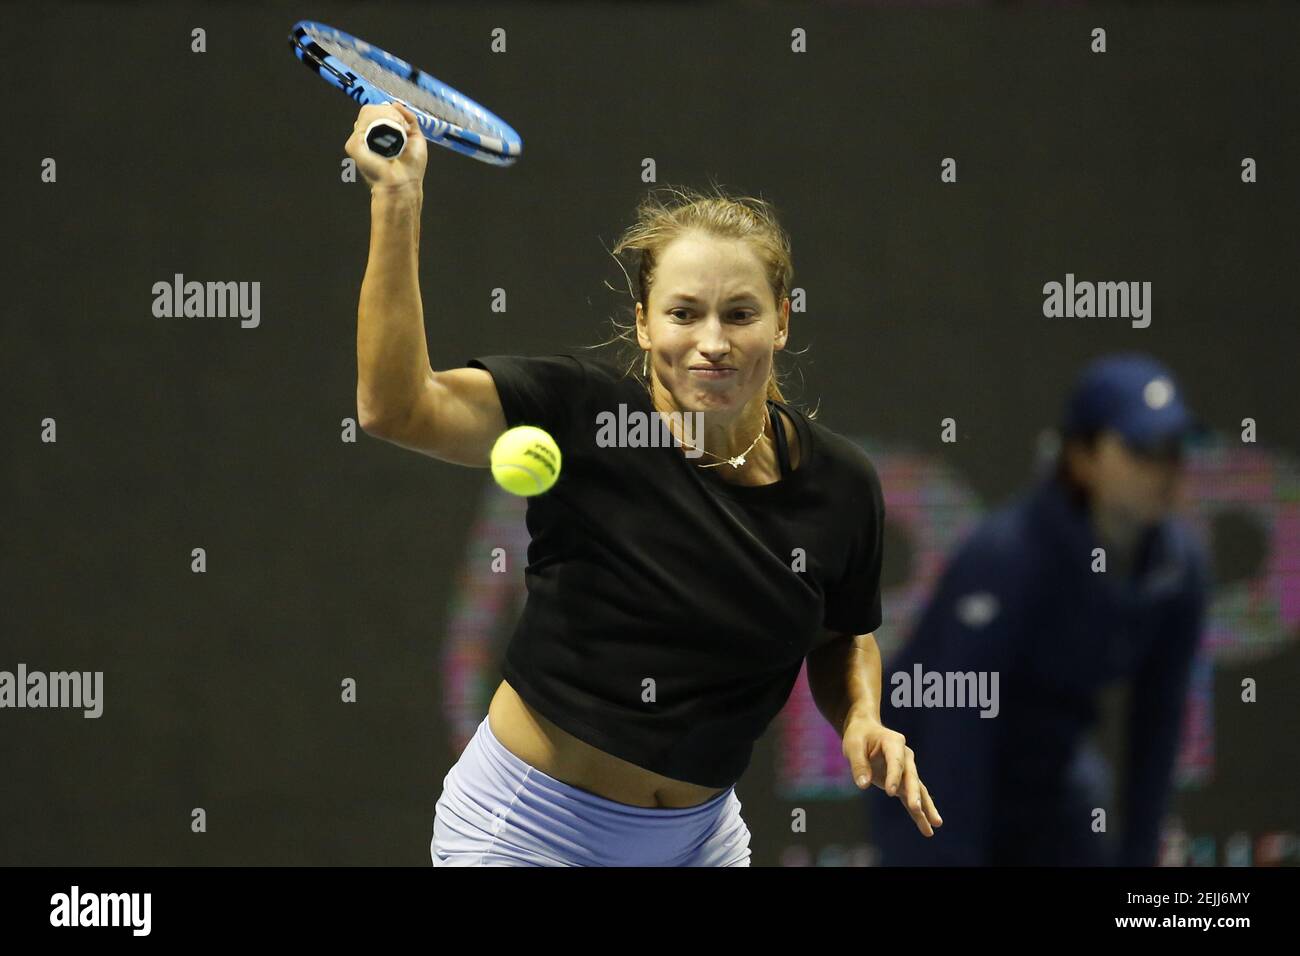 Yulia Putintseva of Kazakhstan reacts during a match against Veronica Kudermetova of Russia at the St.Petersburg Ladies Trophy 2020 tennis tournament at Sibur Arena